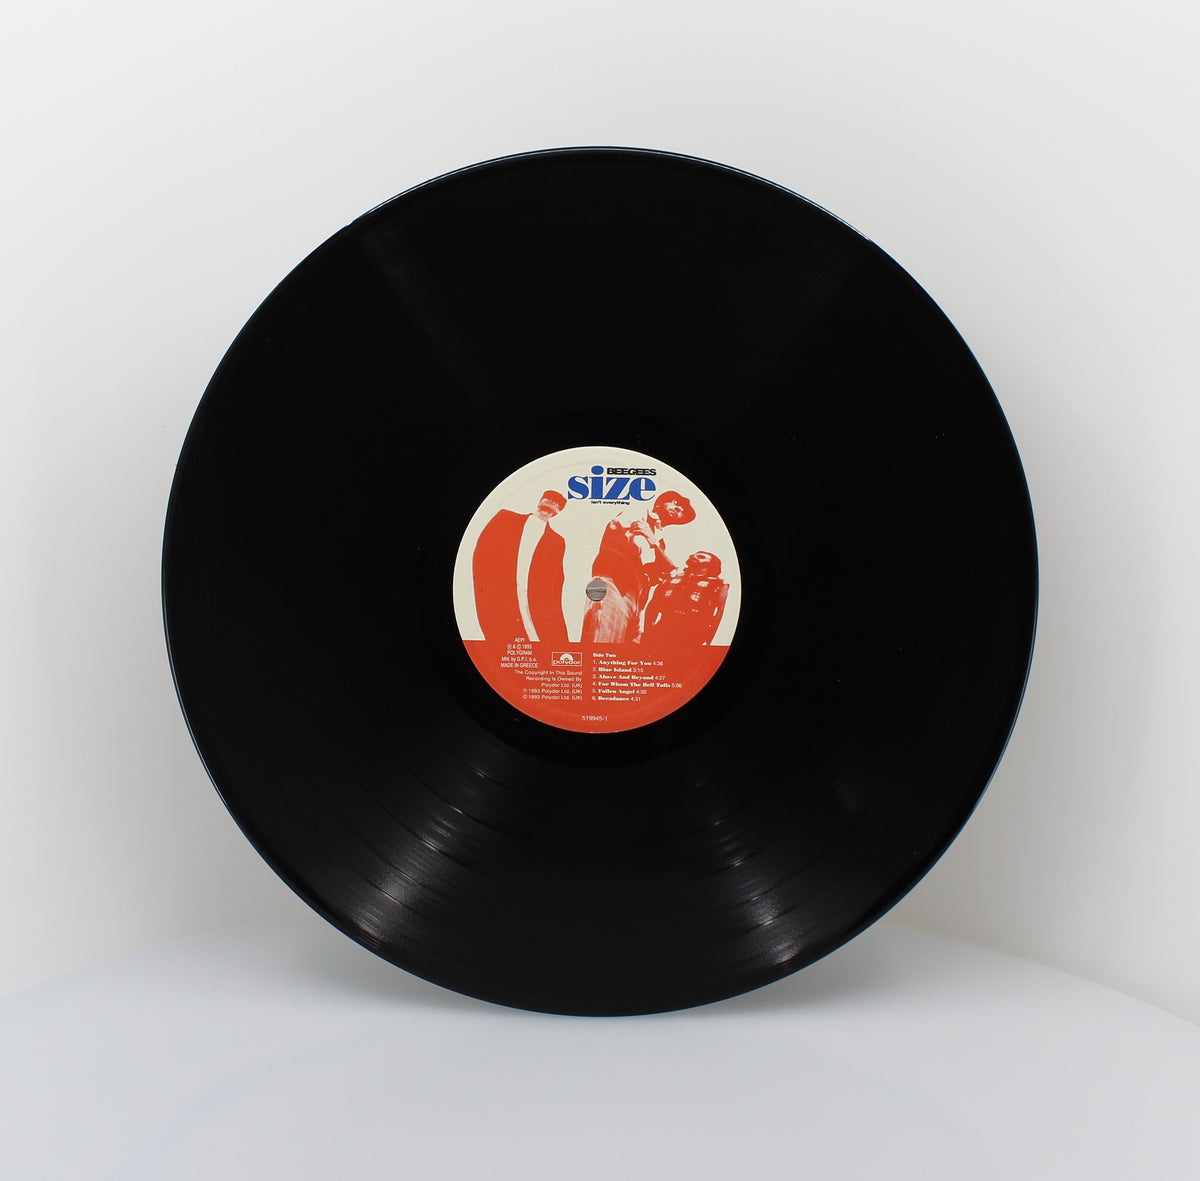 Bee Gees – Size Isn&#39;t Everything, Vinyl, LP, Album, Israel 1993